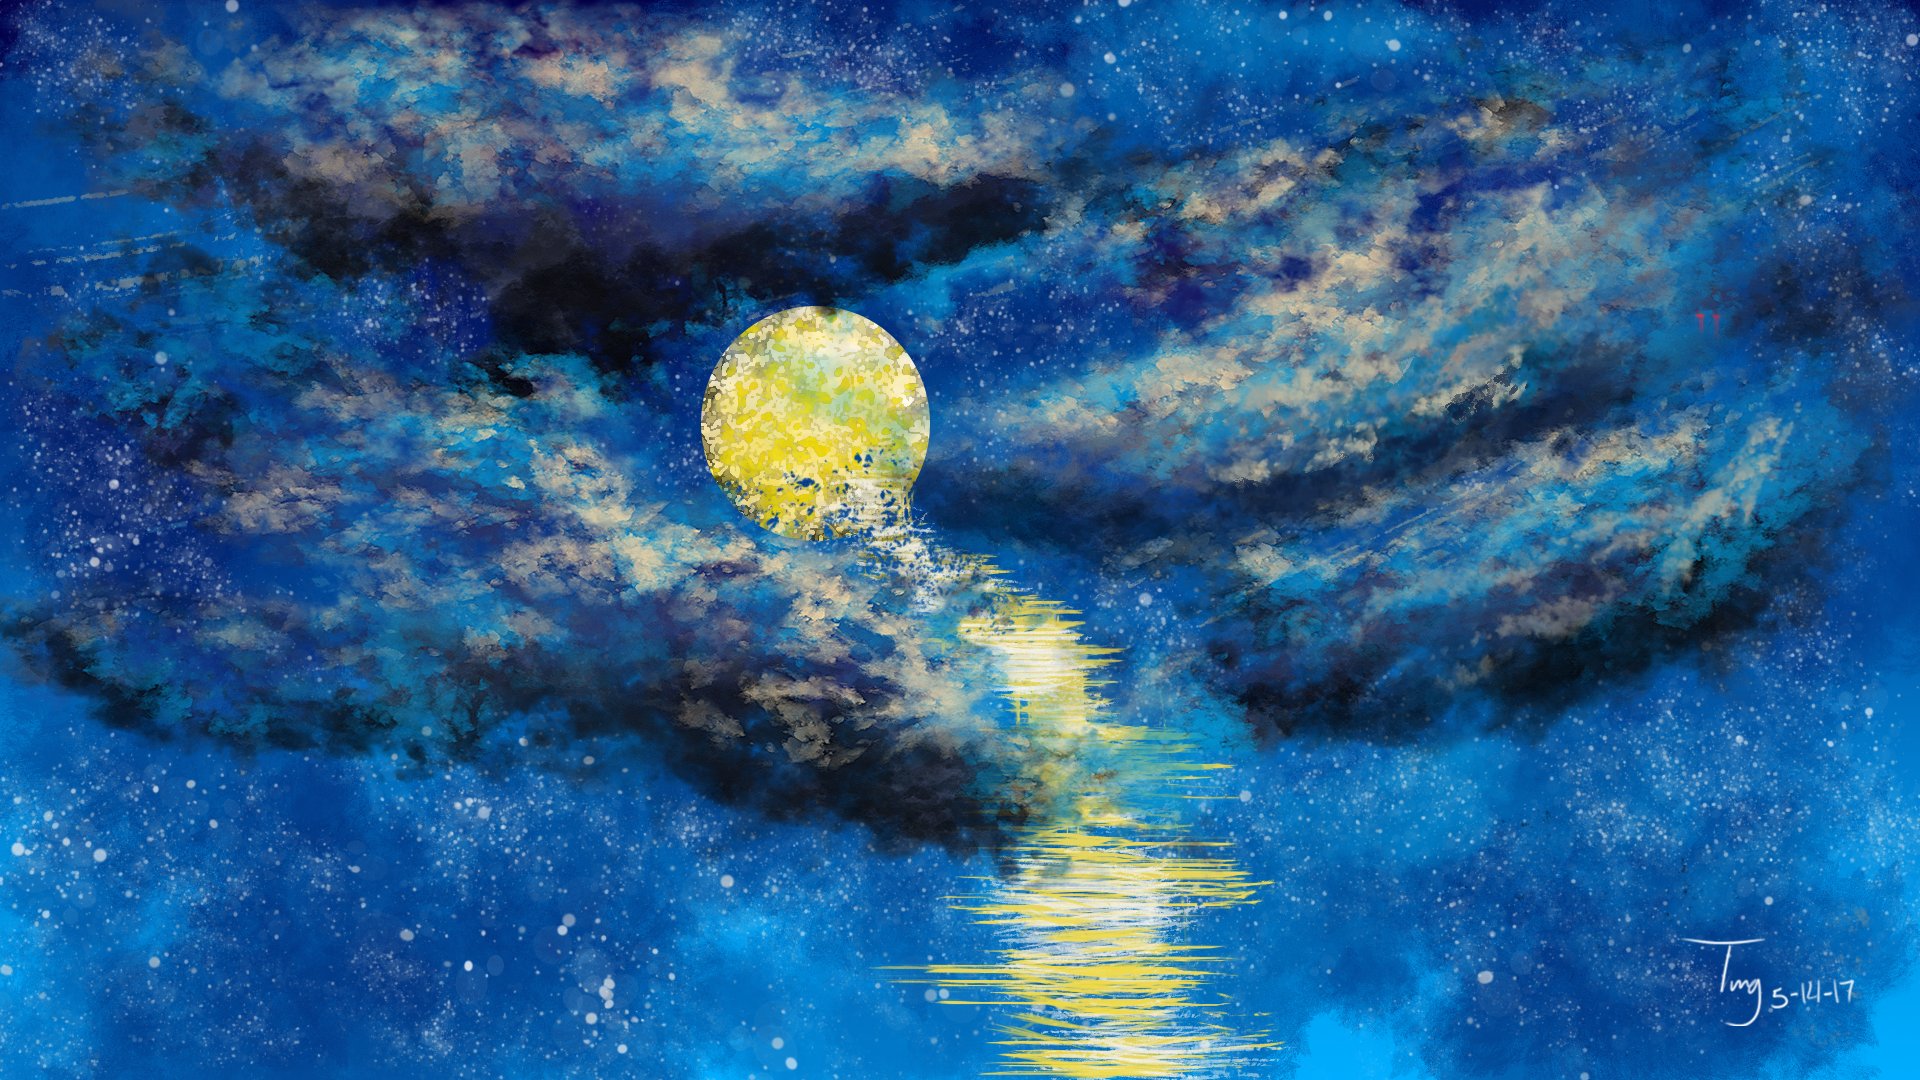 General 1920x1080 moonlight constellations sky stars artwork blue painting